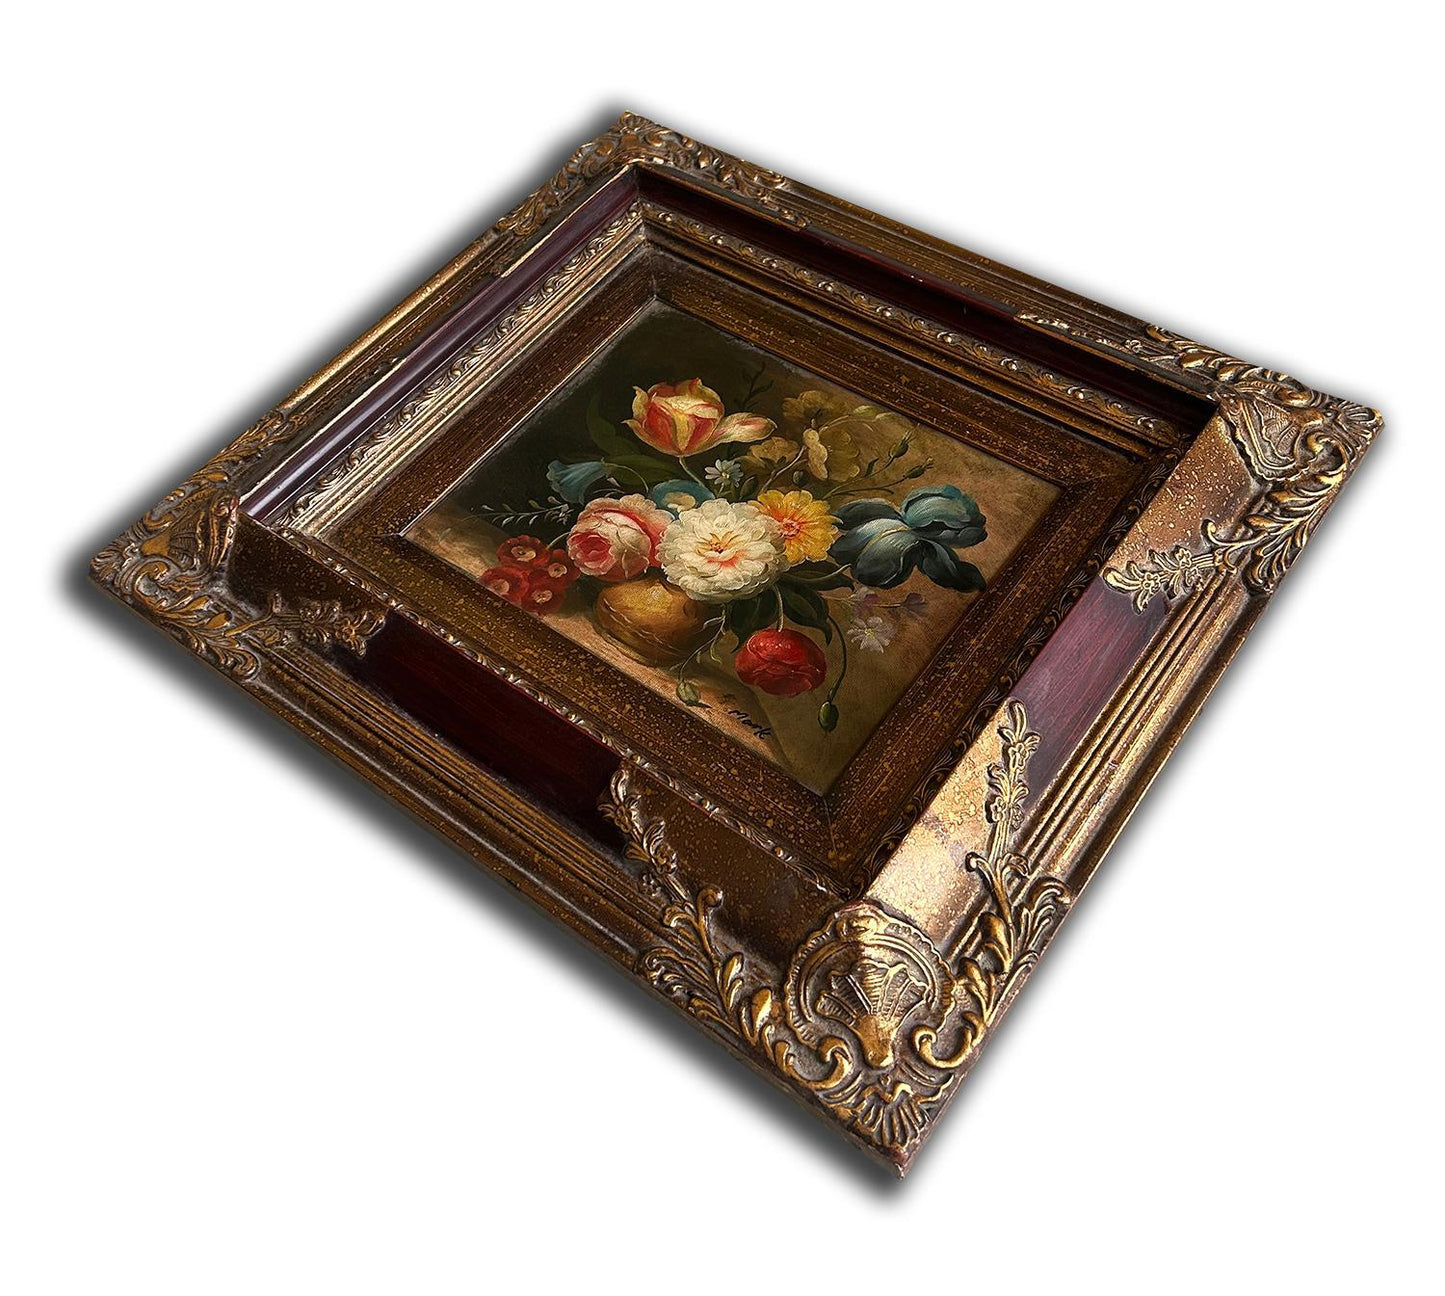 Floral flowers, hand-painted oil painting 40x45 cm eller 16x18 ins